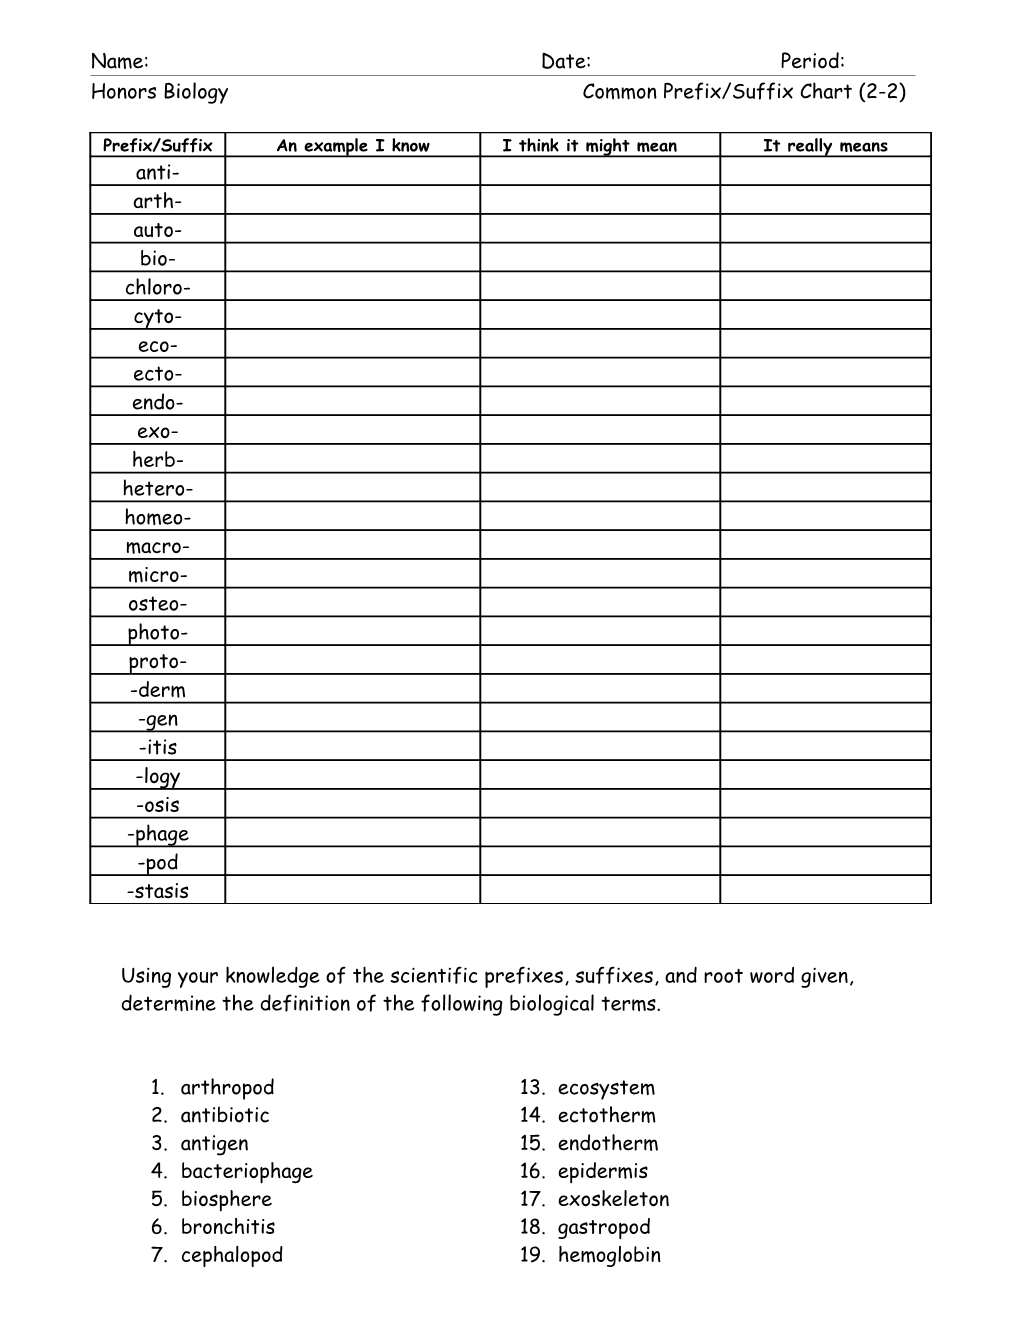 Honors Biology Common Prefix/Suffix Chart (2-2)